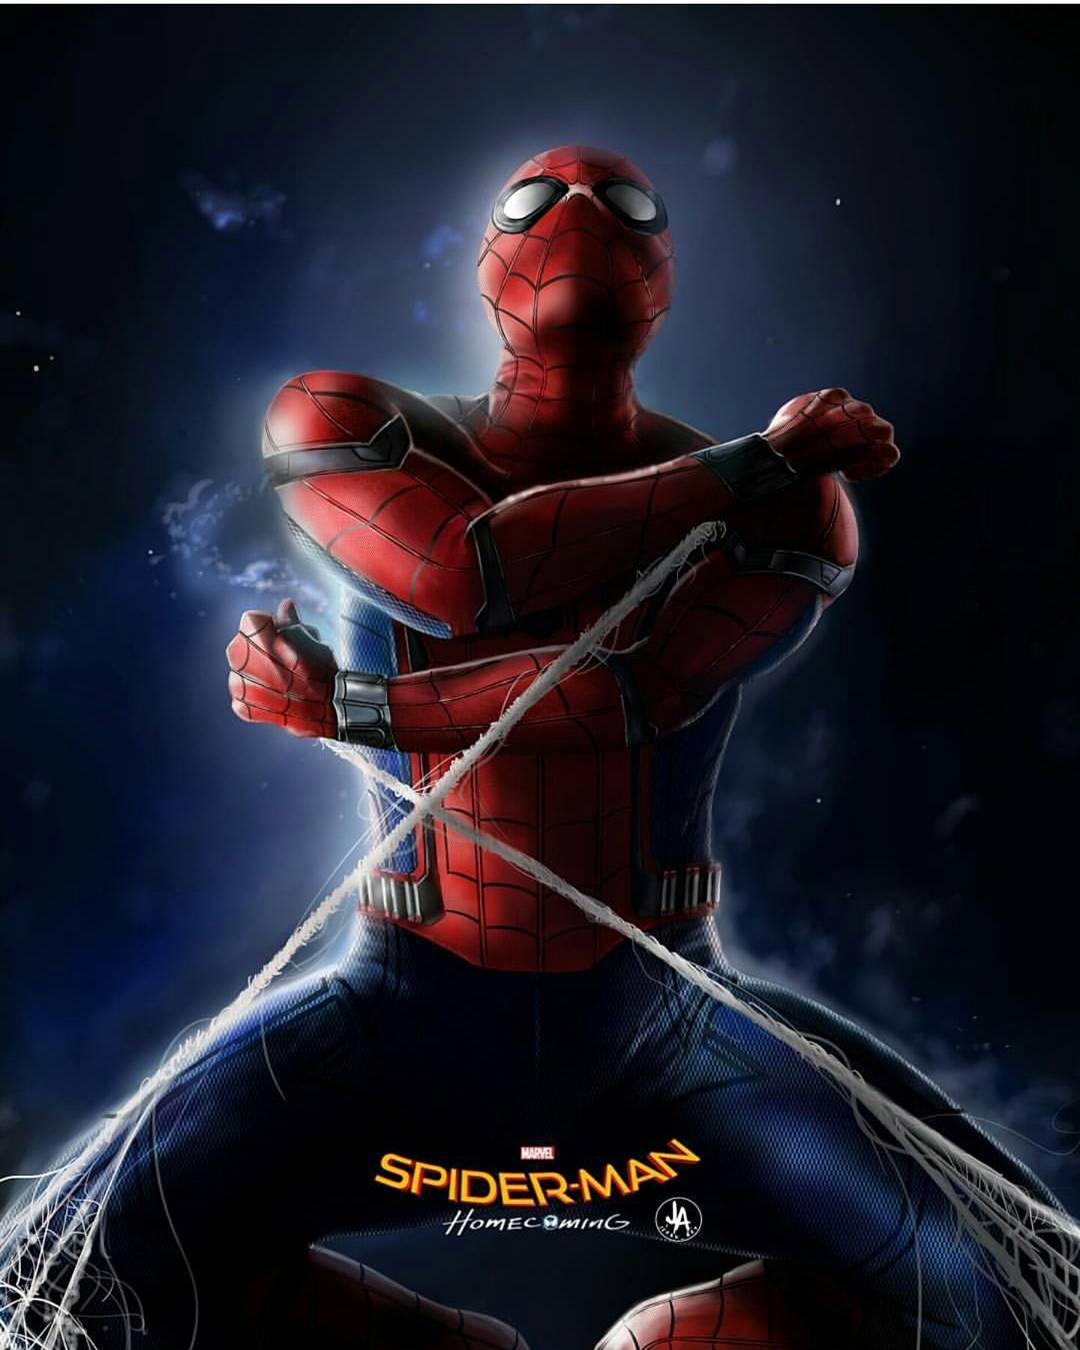 Spiderman Homecoming Wallpaper & Stills 2017. HD IMAGES 1080p